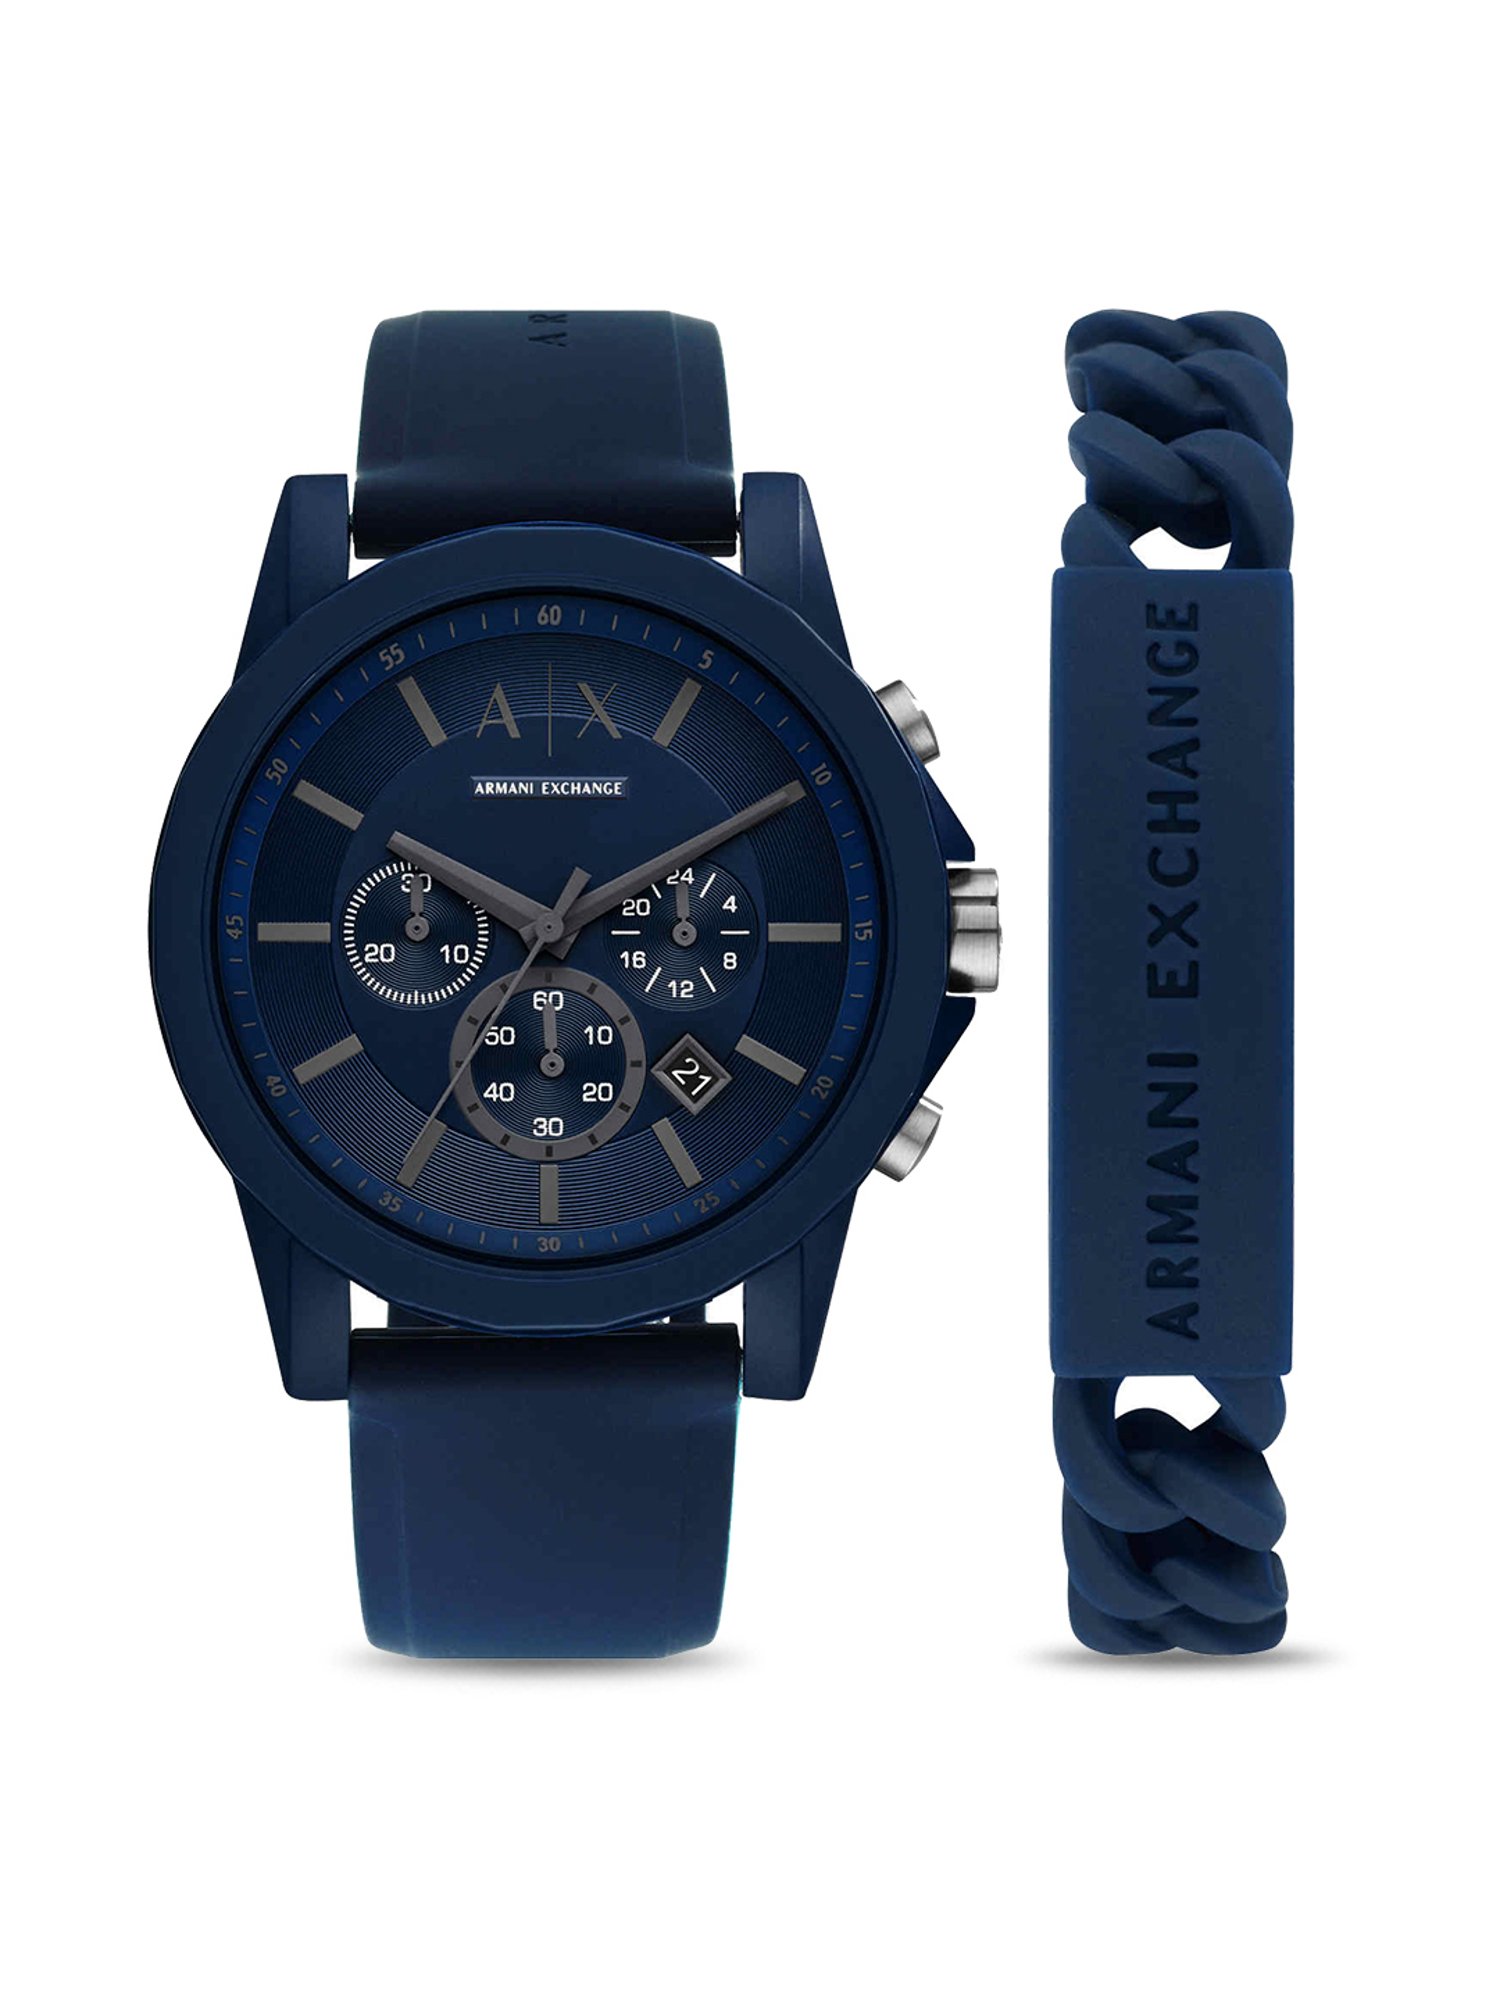 Buy ARMANI EXCHANGE AX7128 Analog Watch for Men at Best Price @ Tata CLiQ